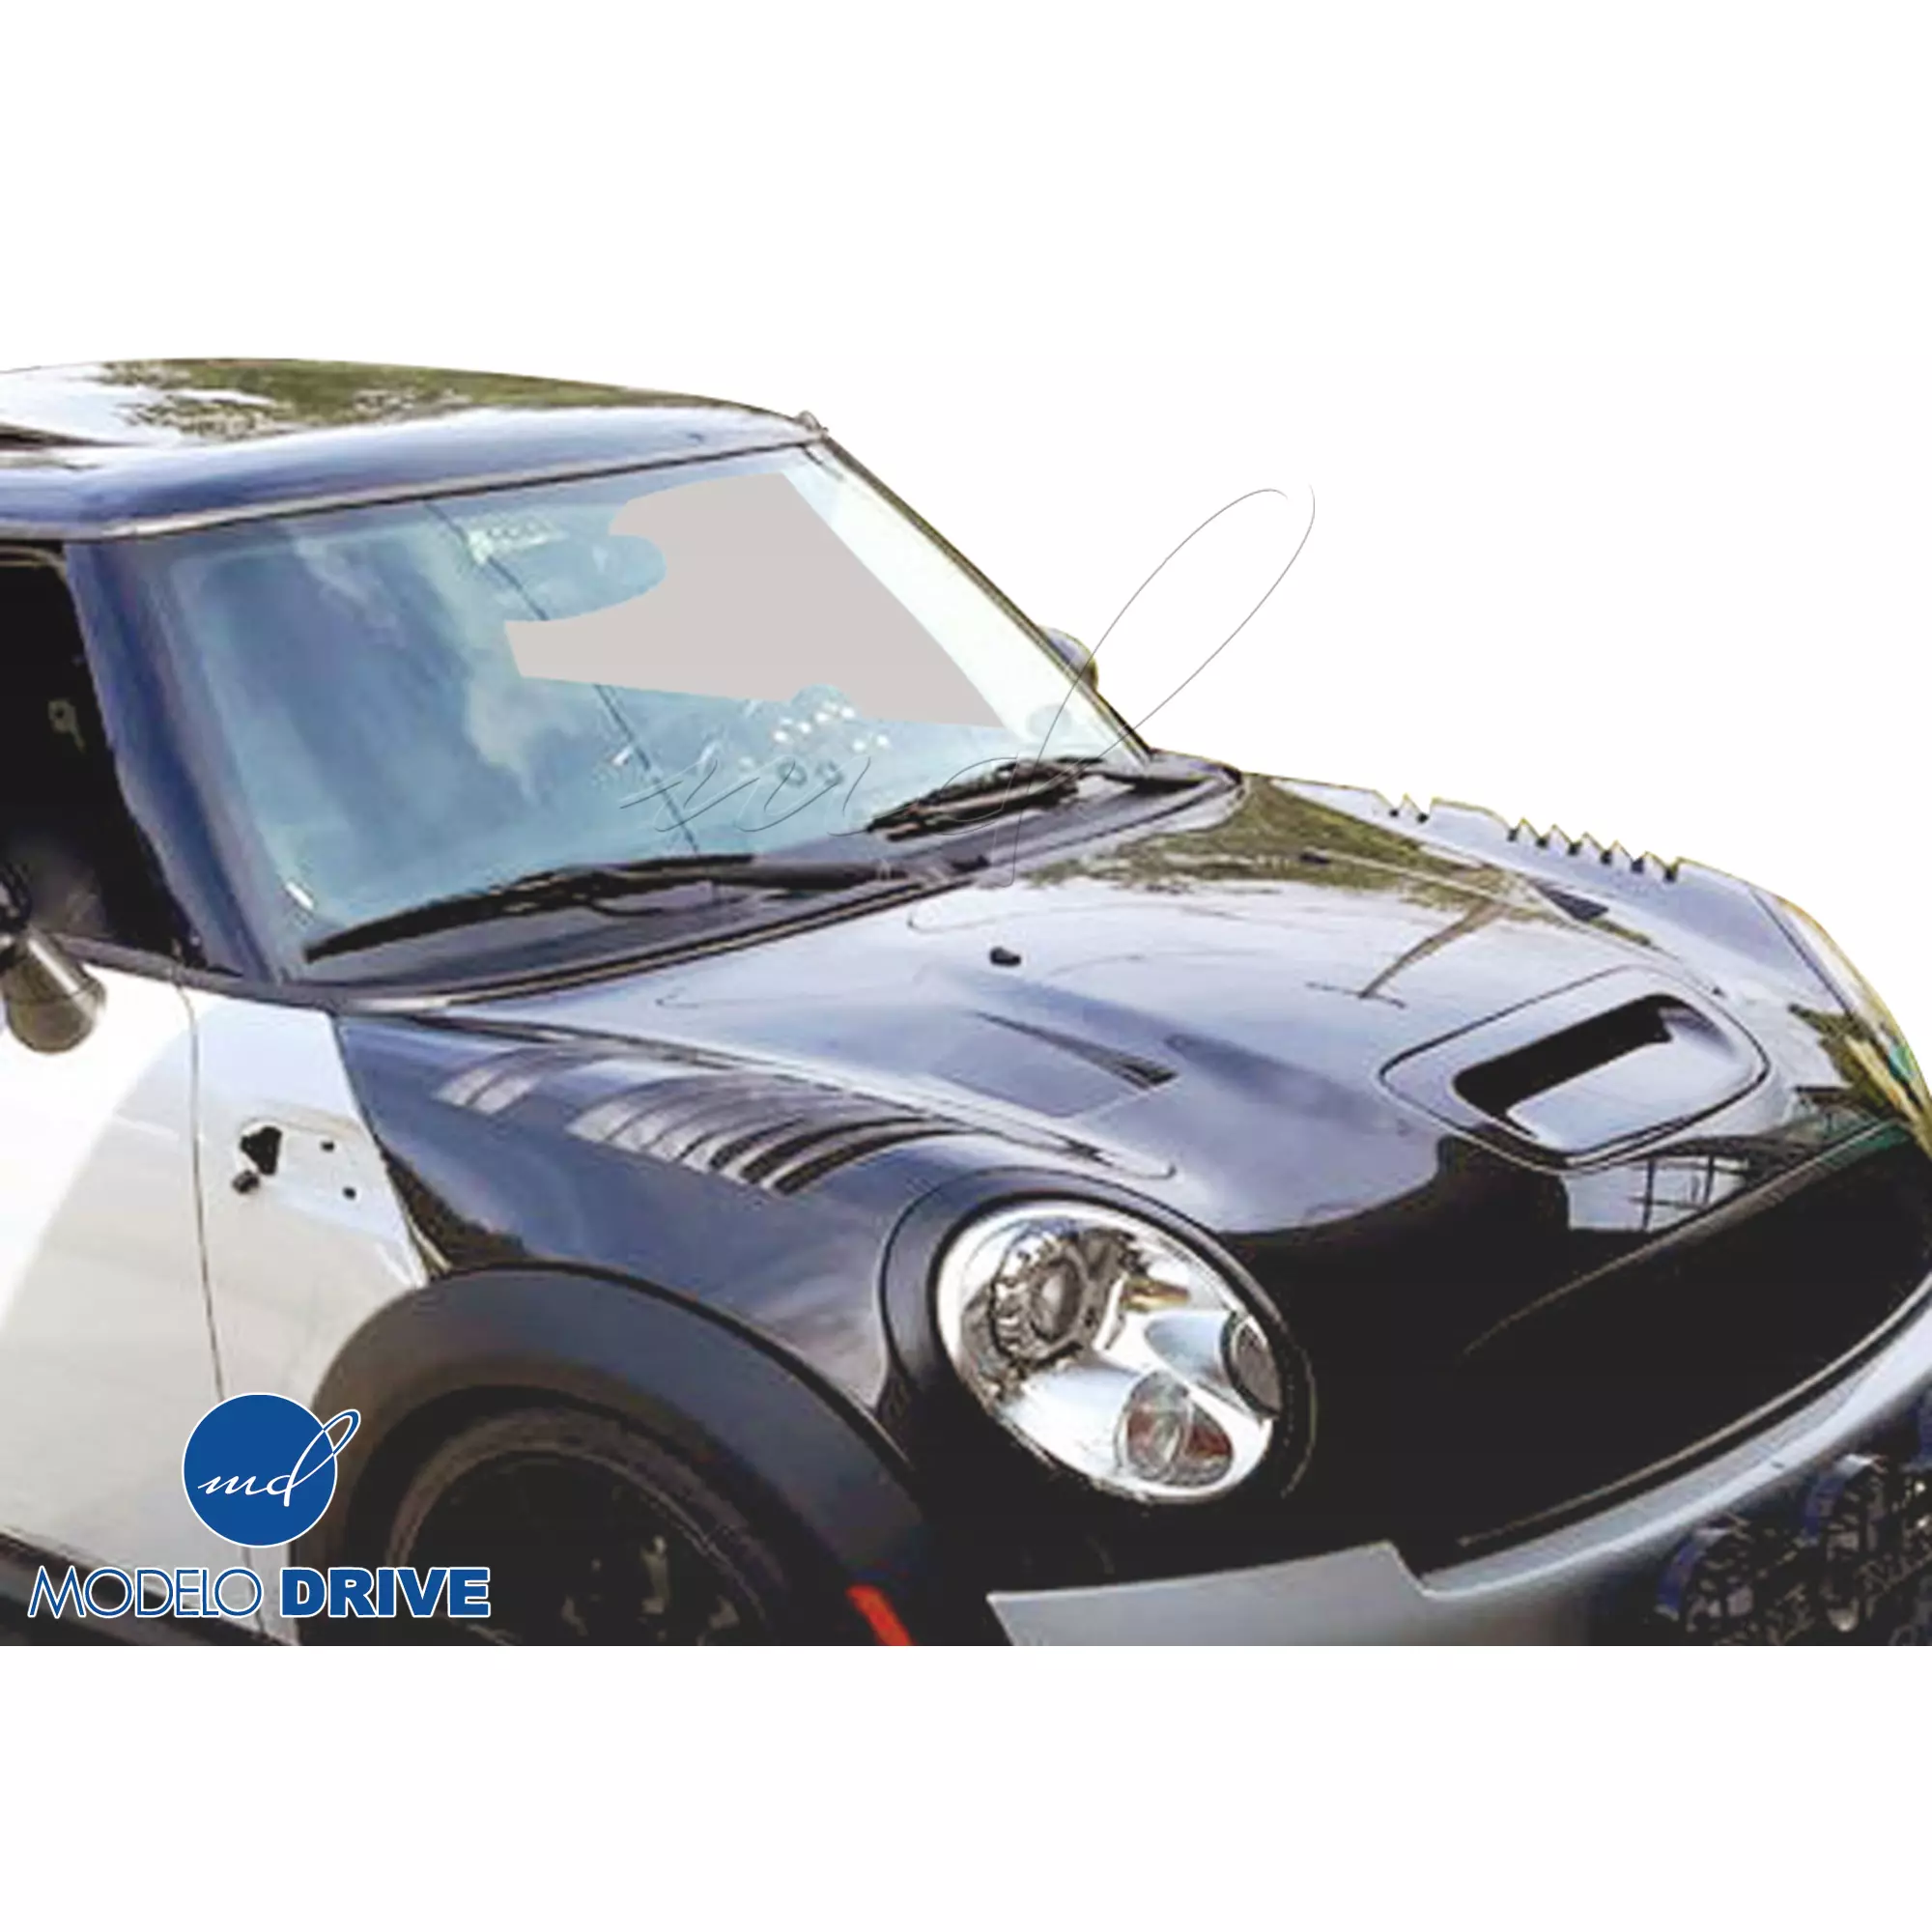 ModeloDrive Carbon Fiber DUAG Hood > Mini Mini Cooper F56 F57 2014-2020 - Image 2